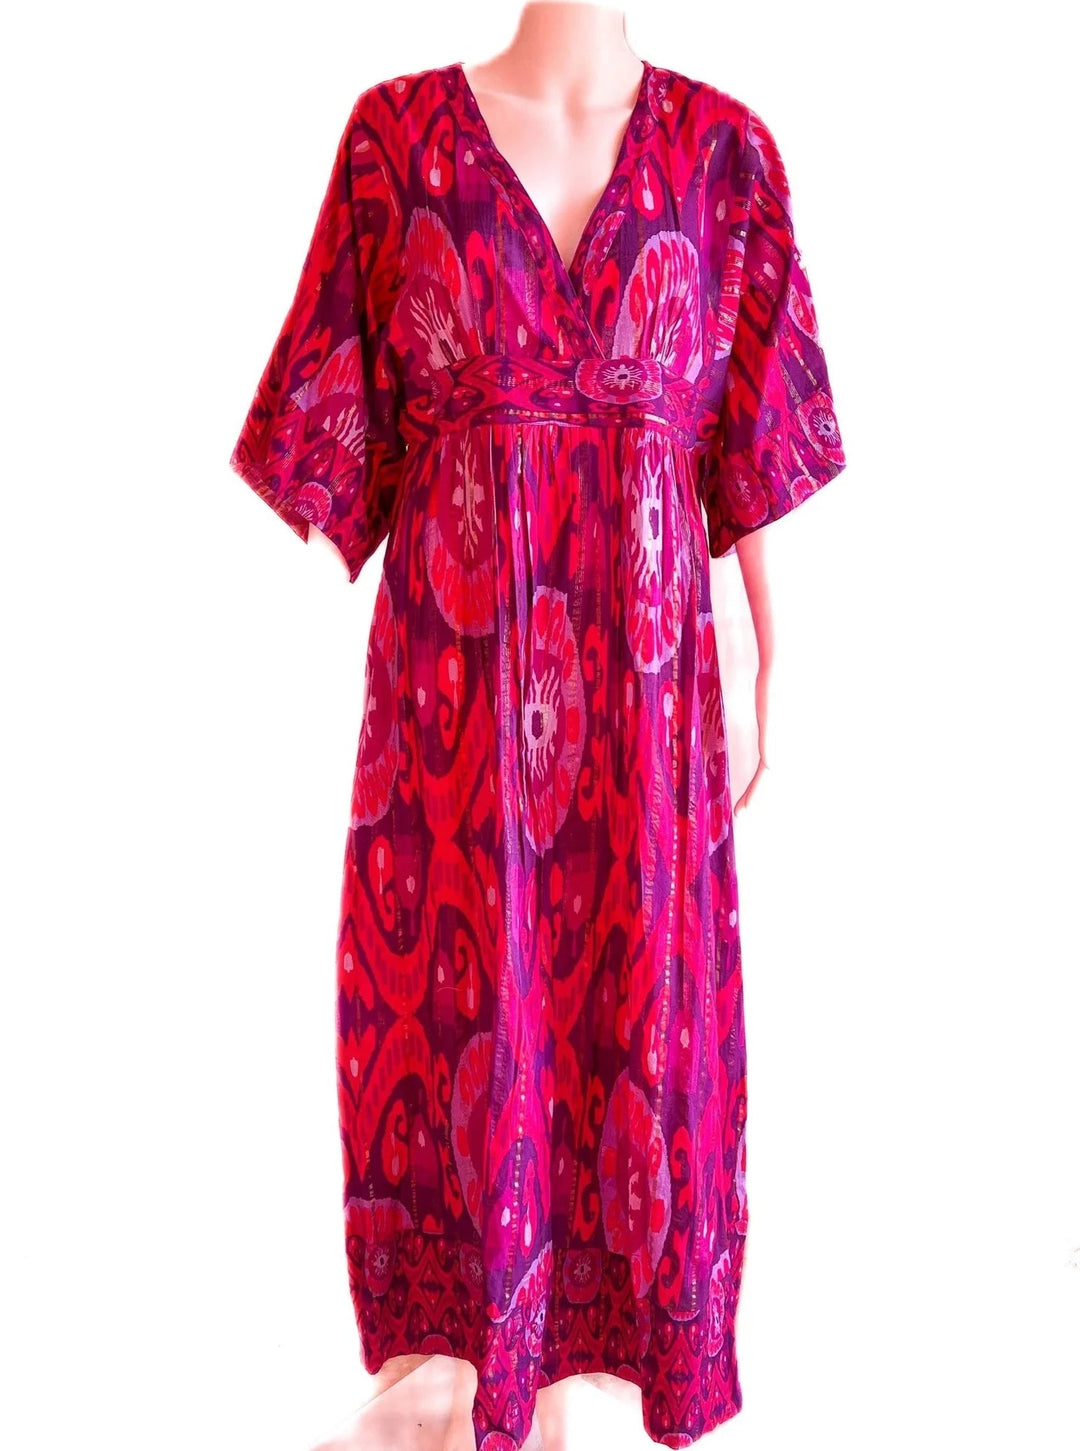 La Plage Dress Vintage Kaftan Maxi Dress in Island Ikat in Cranberry